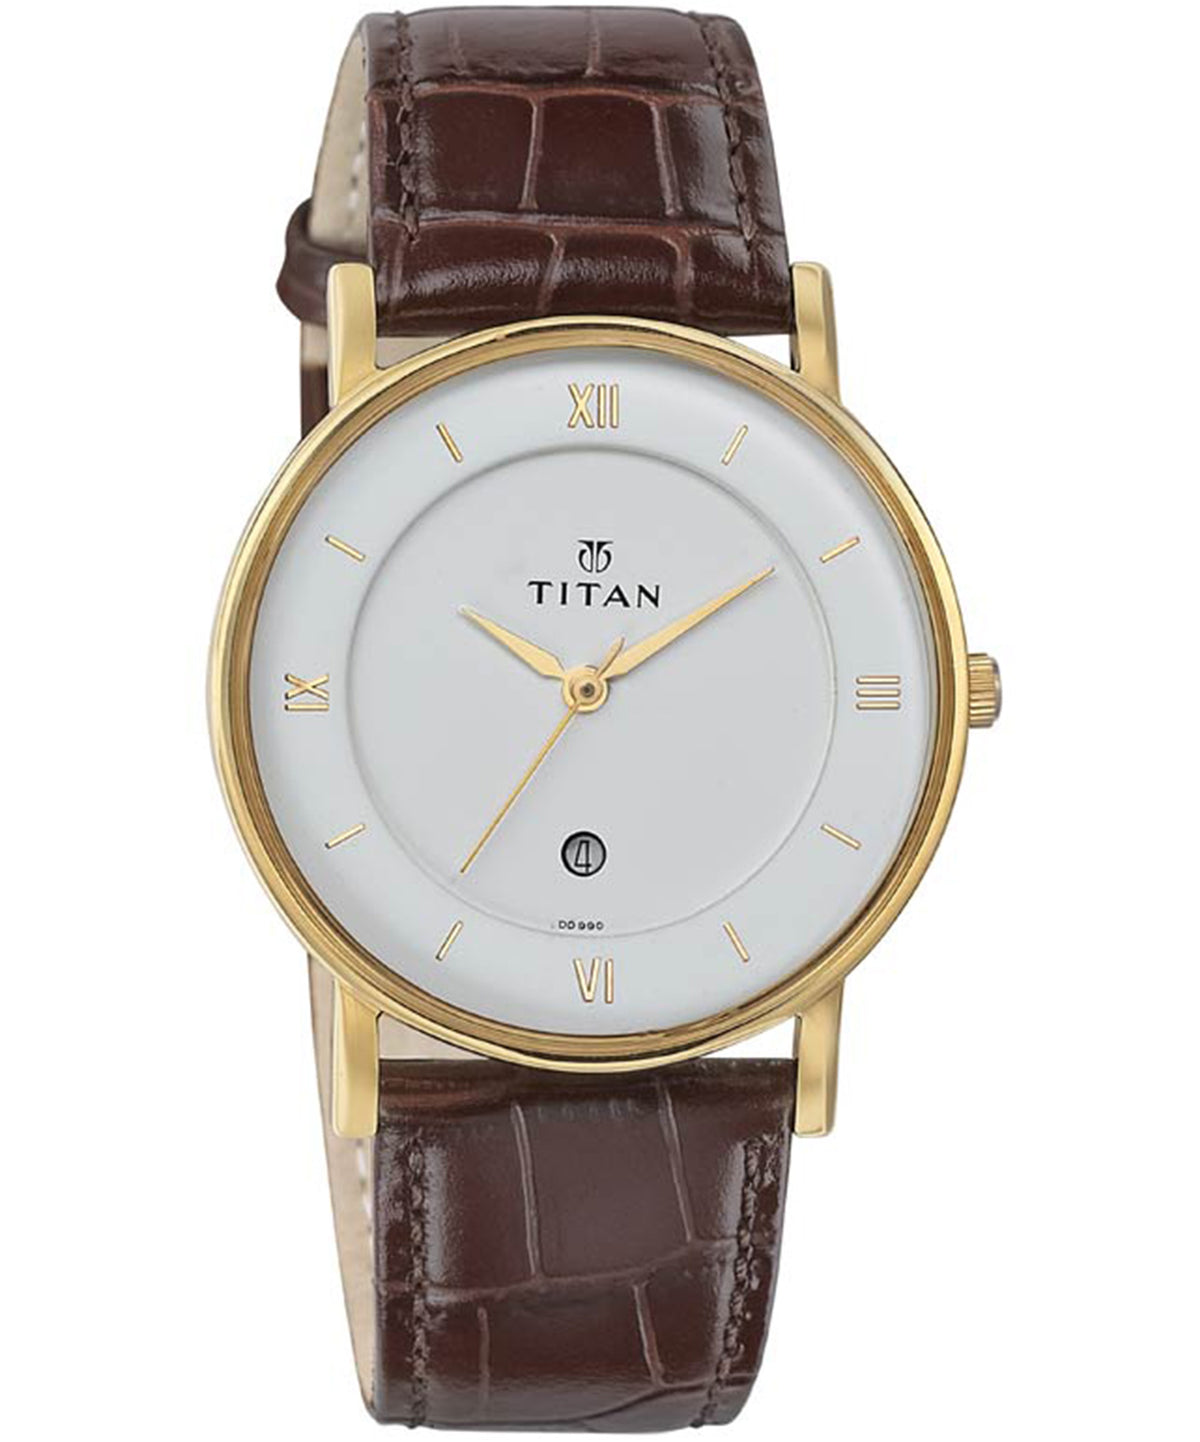 Titan Men's Watch White Dial Brown Leather Strap Watch, 9162YL01